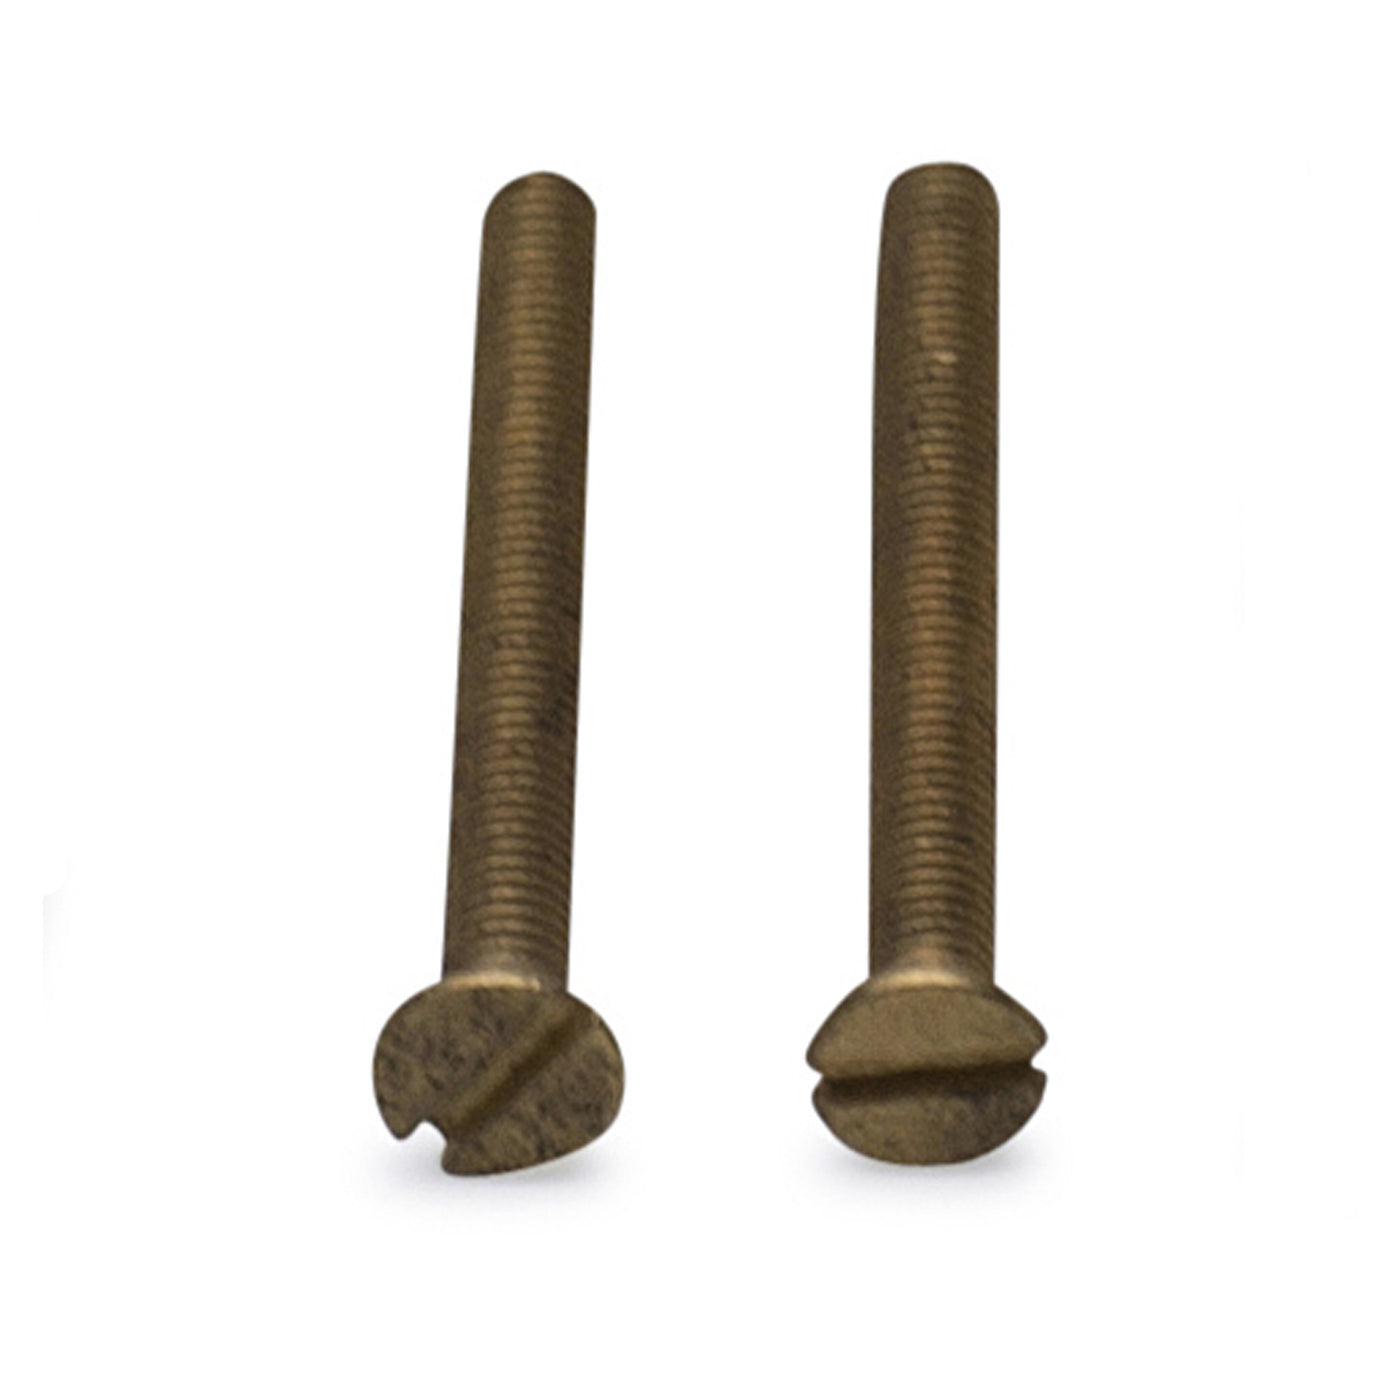 Pair of Standard Rosette Screws (Antique Brass)